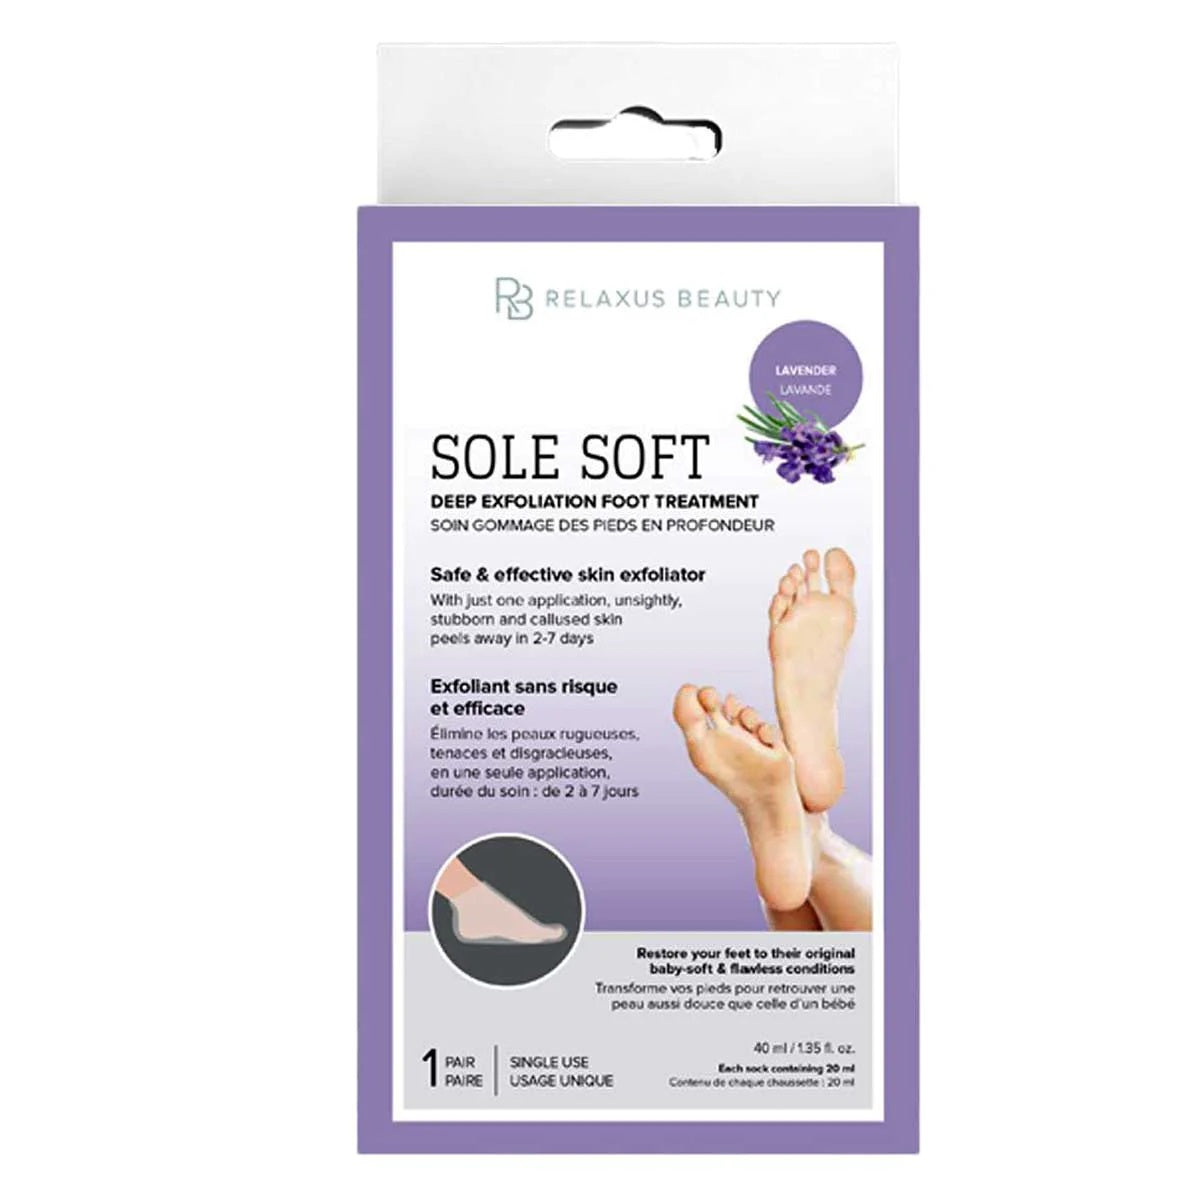 Sole Soft Deep Exfoliation Foot Treatment